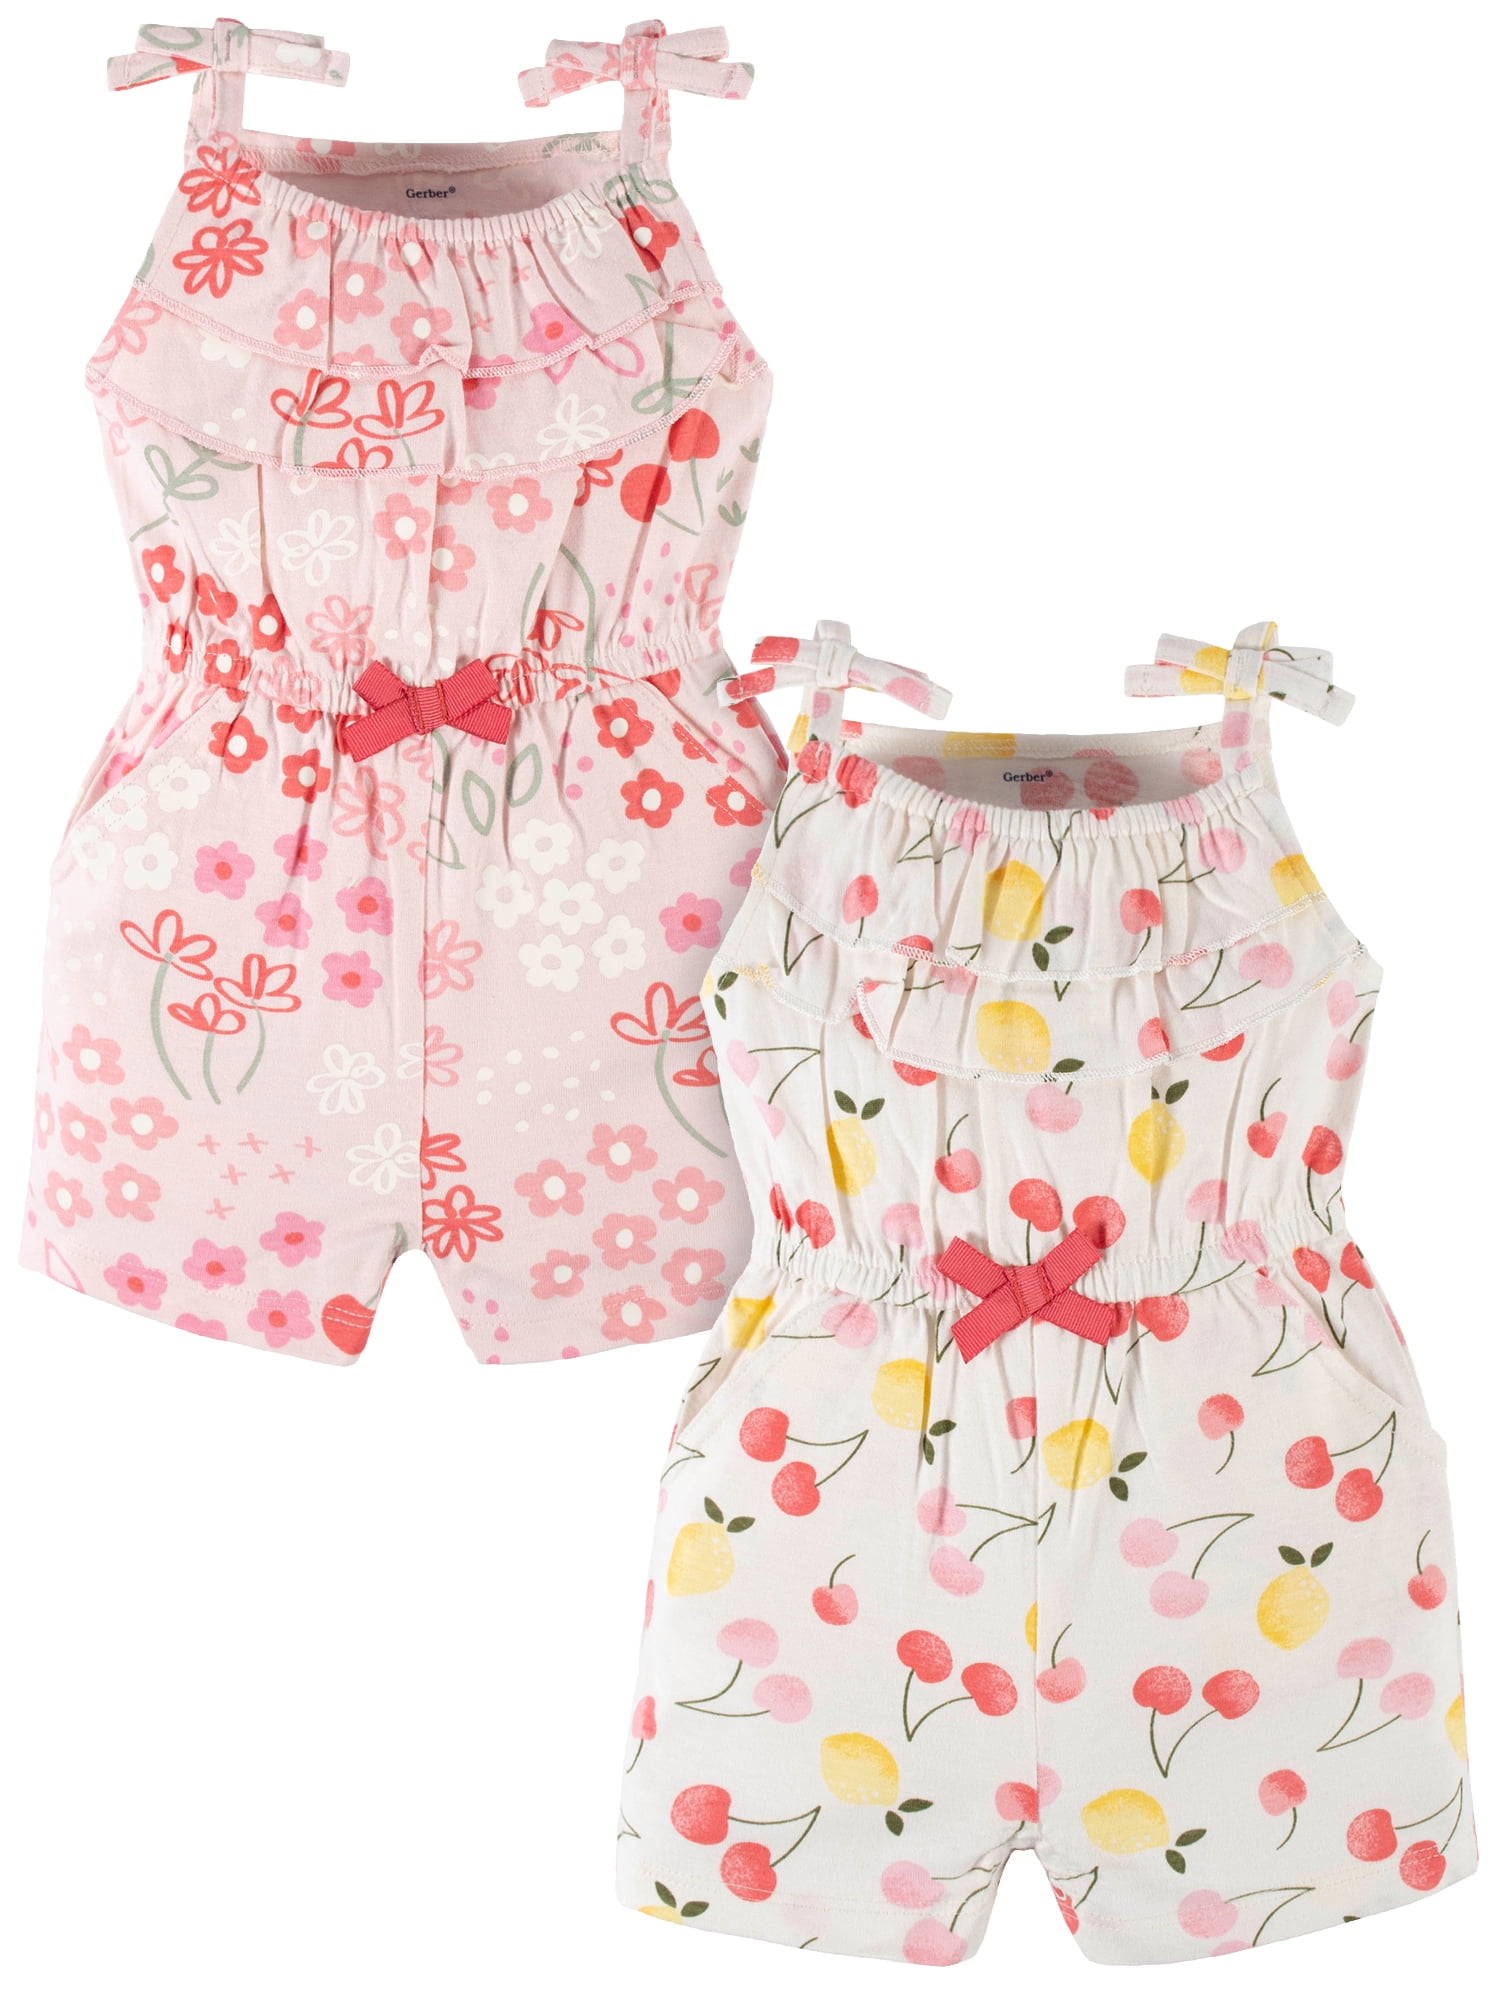 Short Baby Girl Romper Cotton Pink & White Summer size 3-6 months by Dandelion 